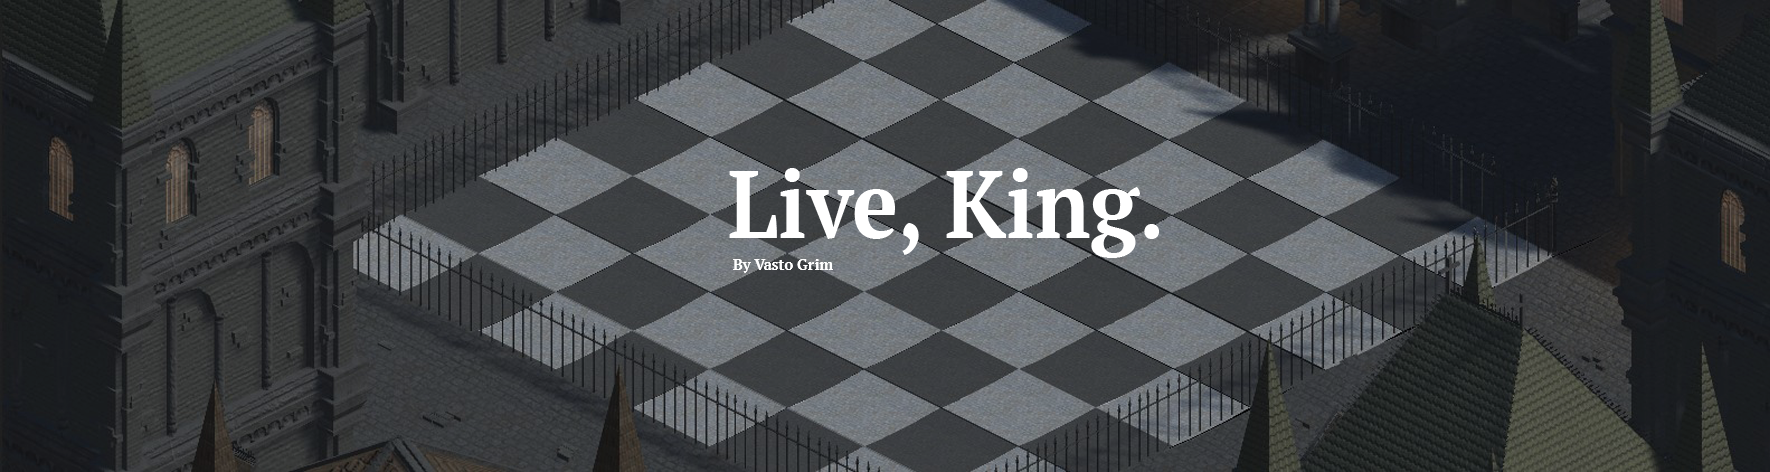 Live, King.